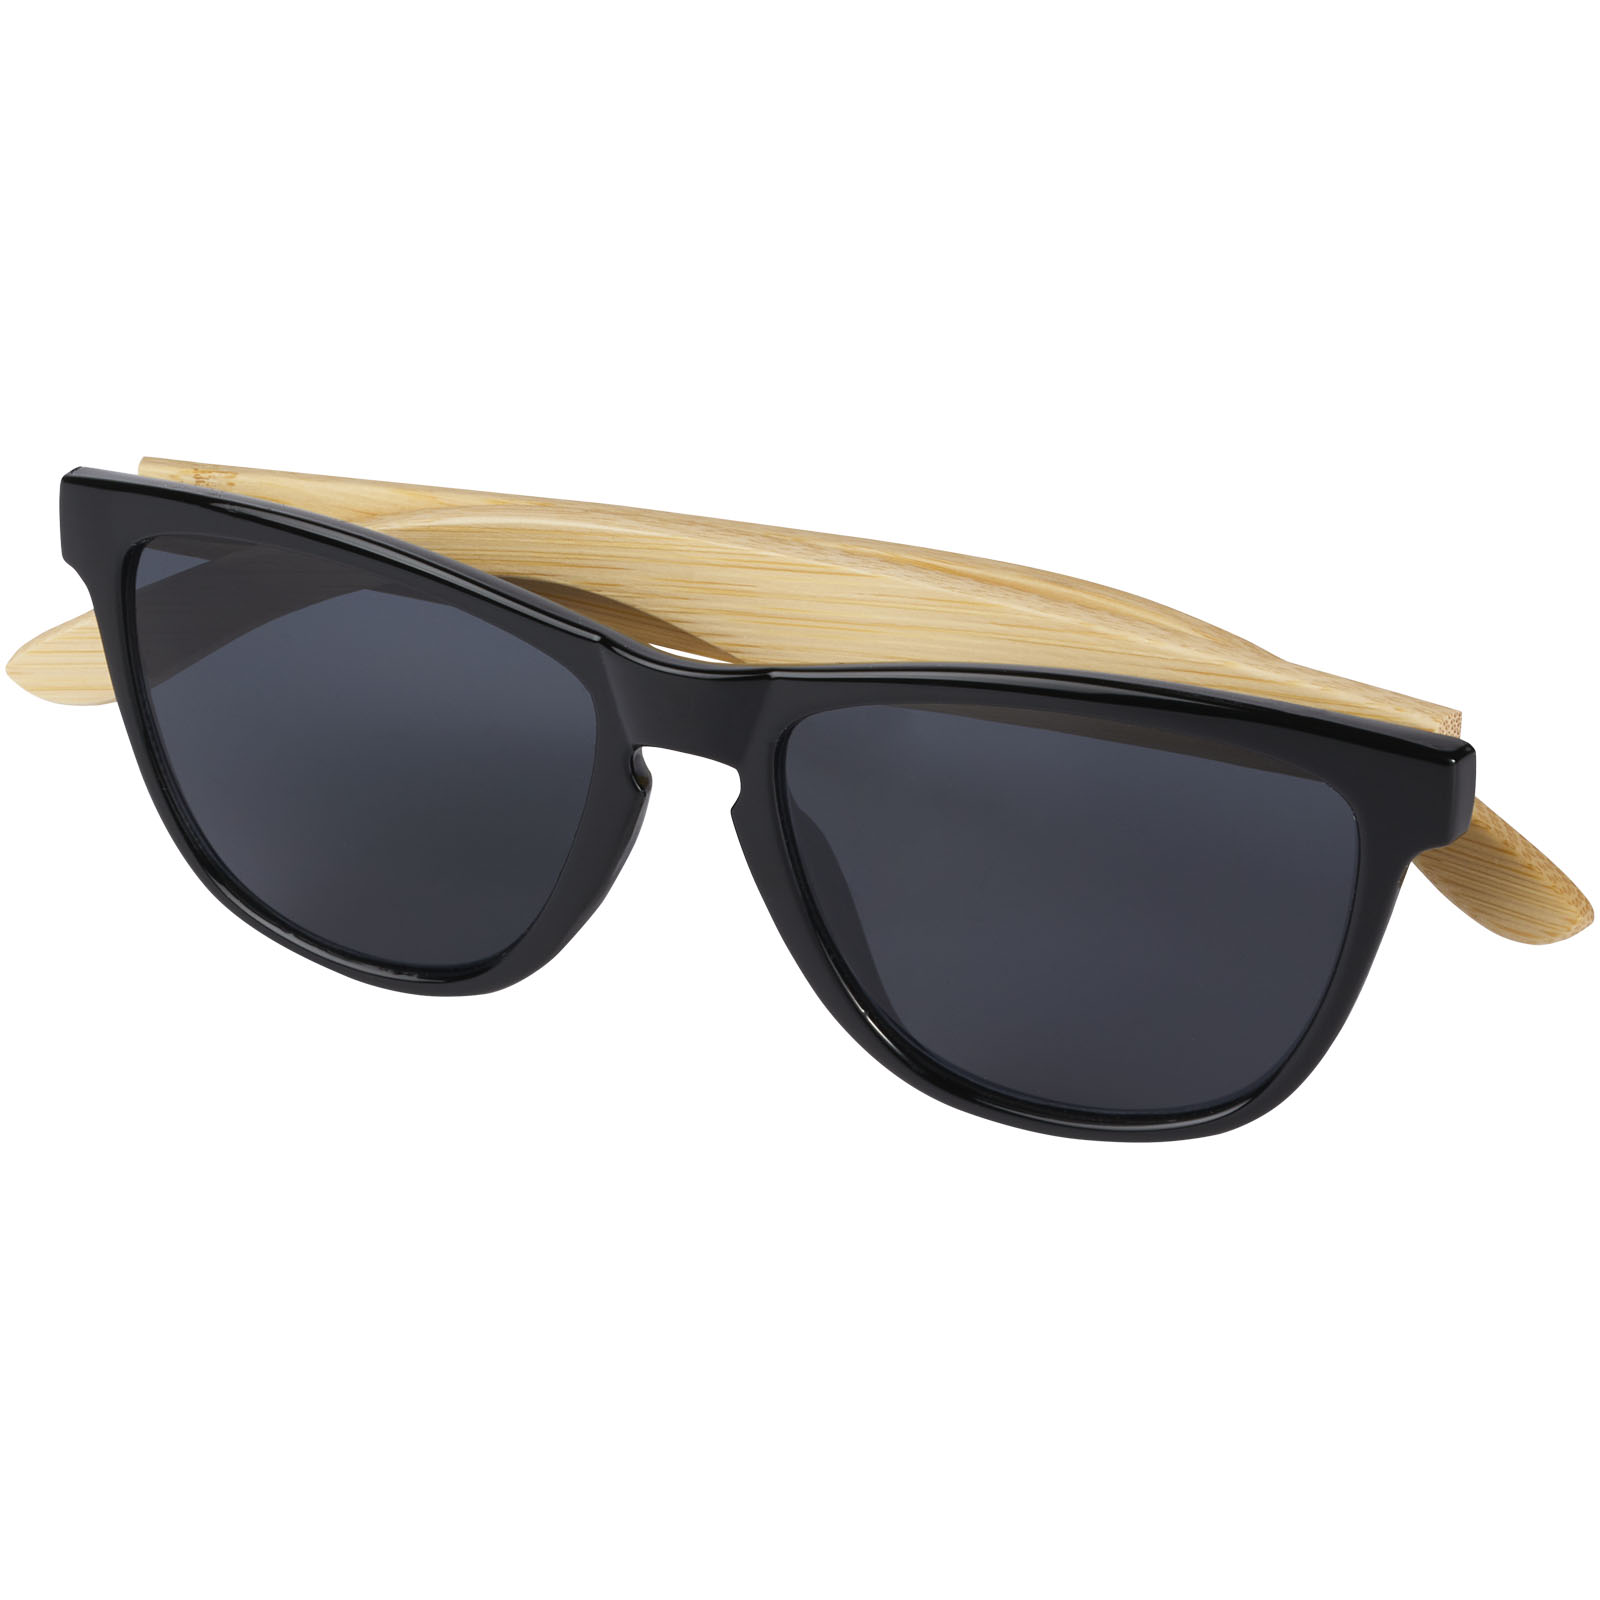 Advertising Sunglasses - Sun Ray ocean bound plastic and bamboo sunglasses - 2